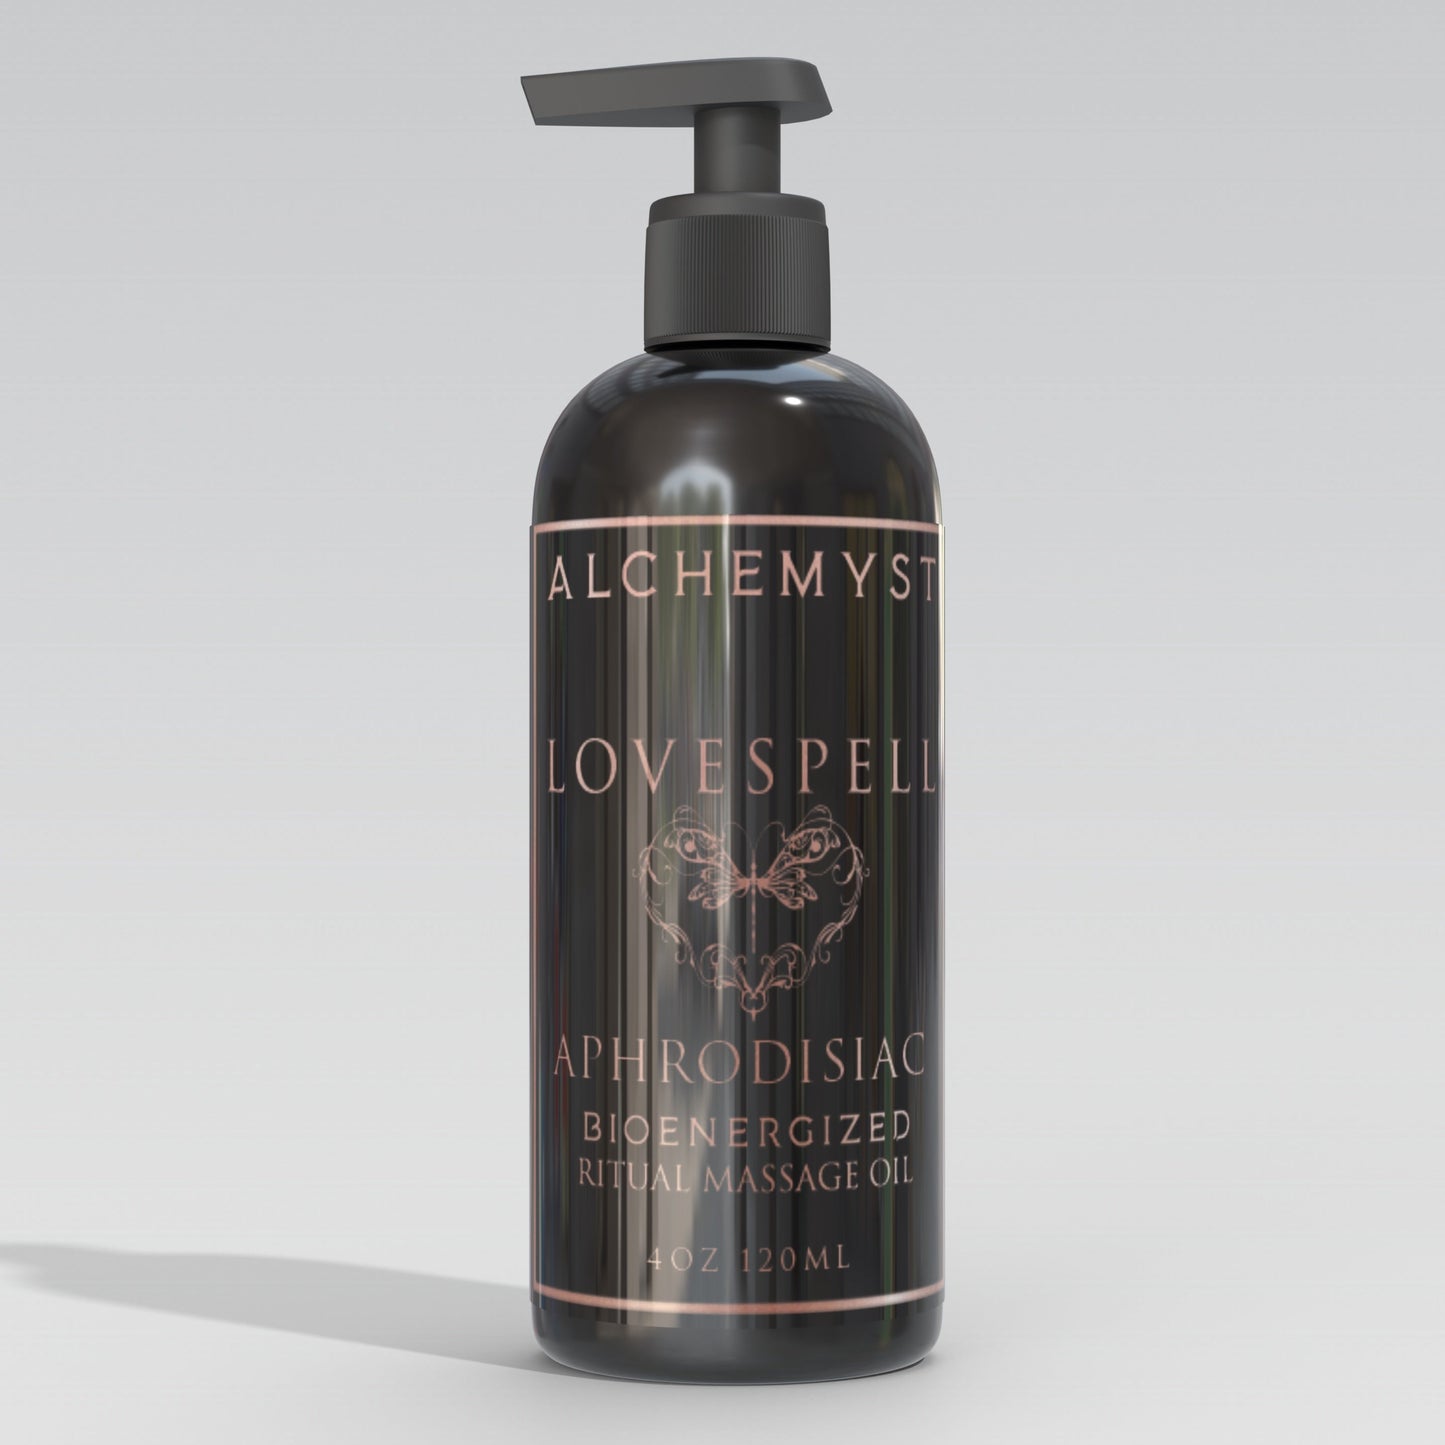 LOVE SPELL - Bioenergized Aphrodisiac Love Potion Massage Oil - 4 Ounce Alchemyst Co